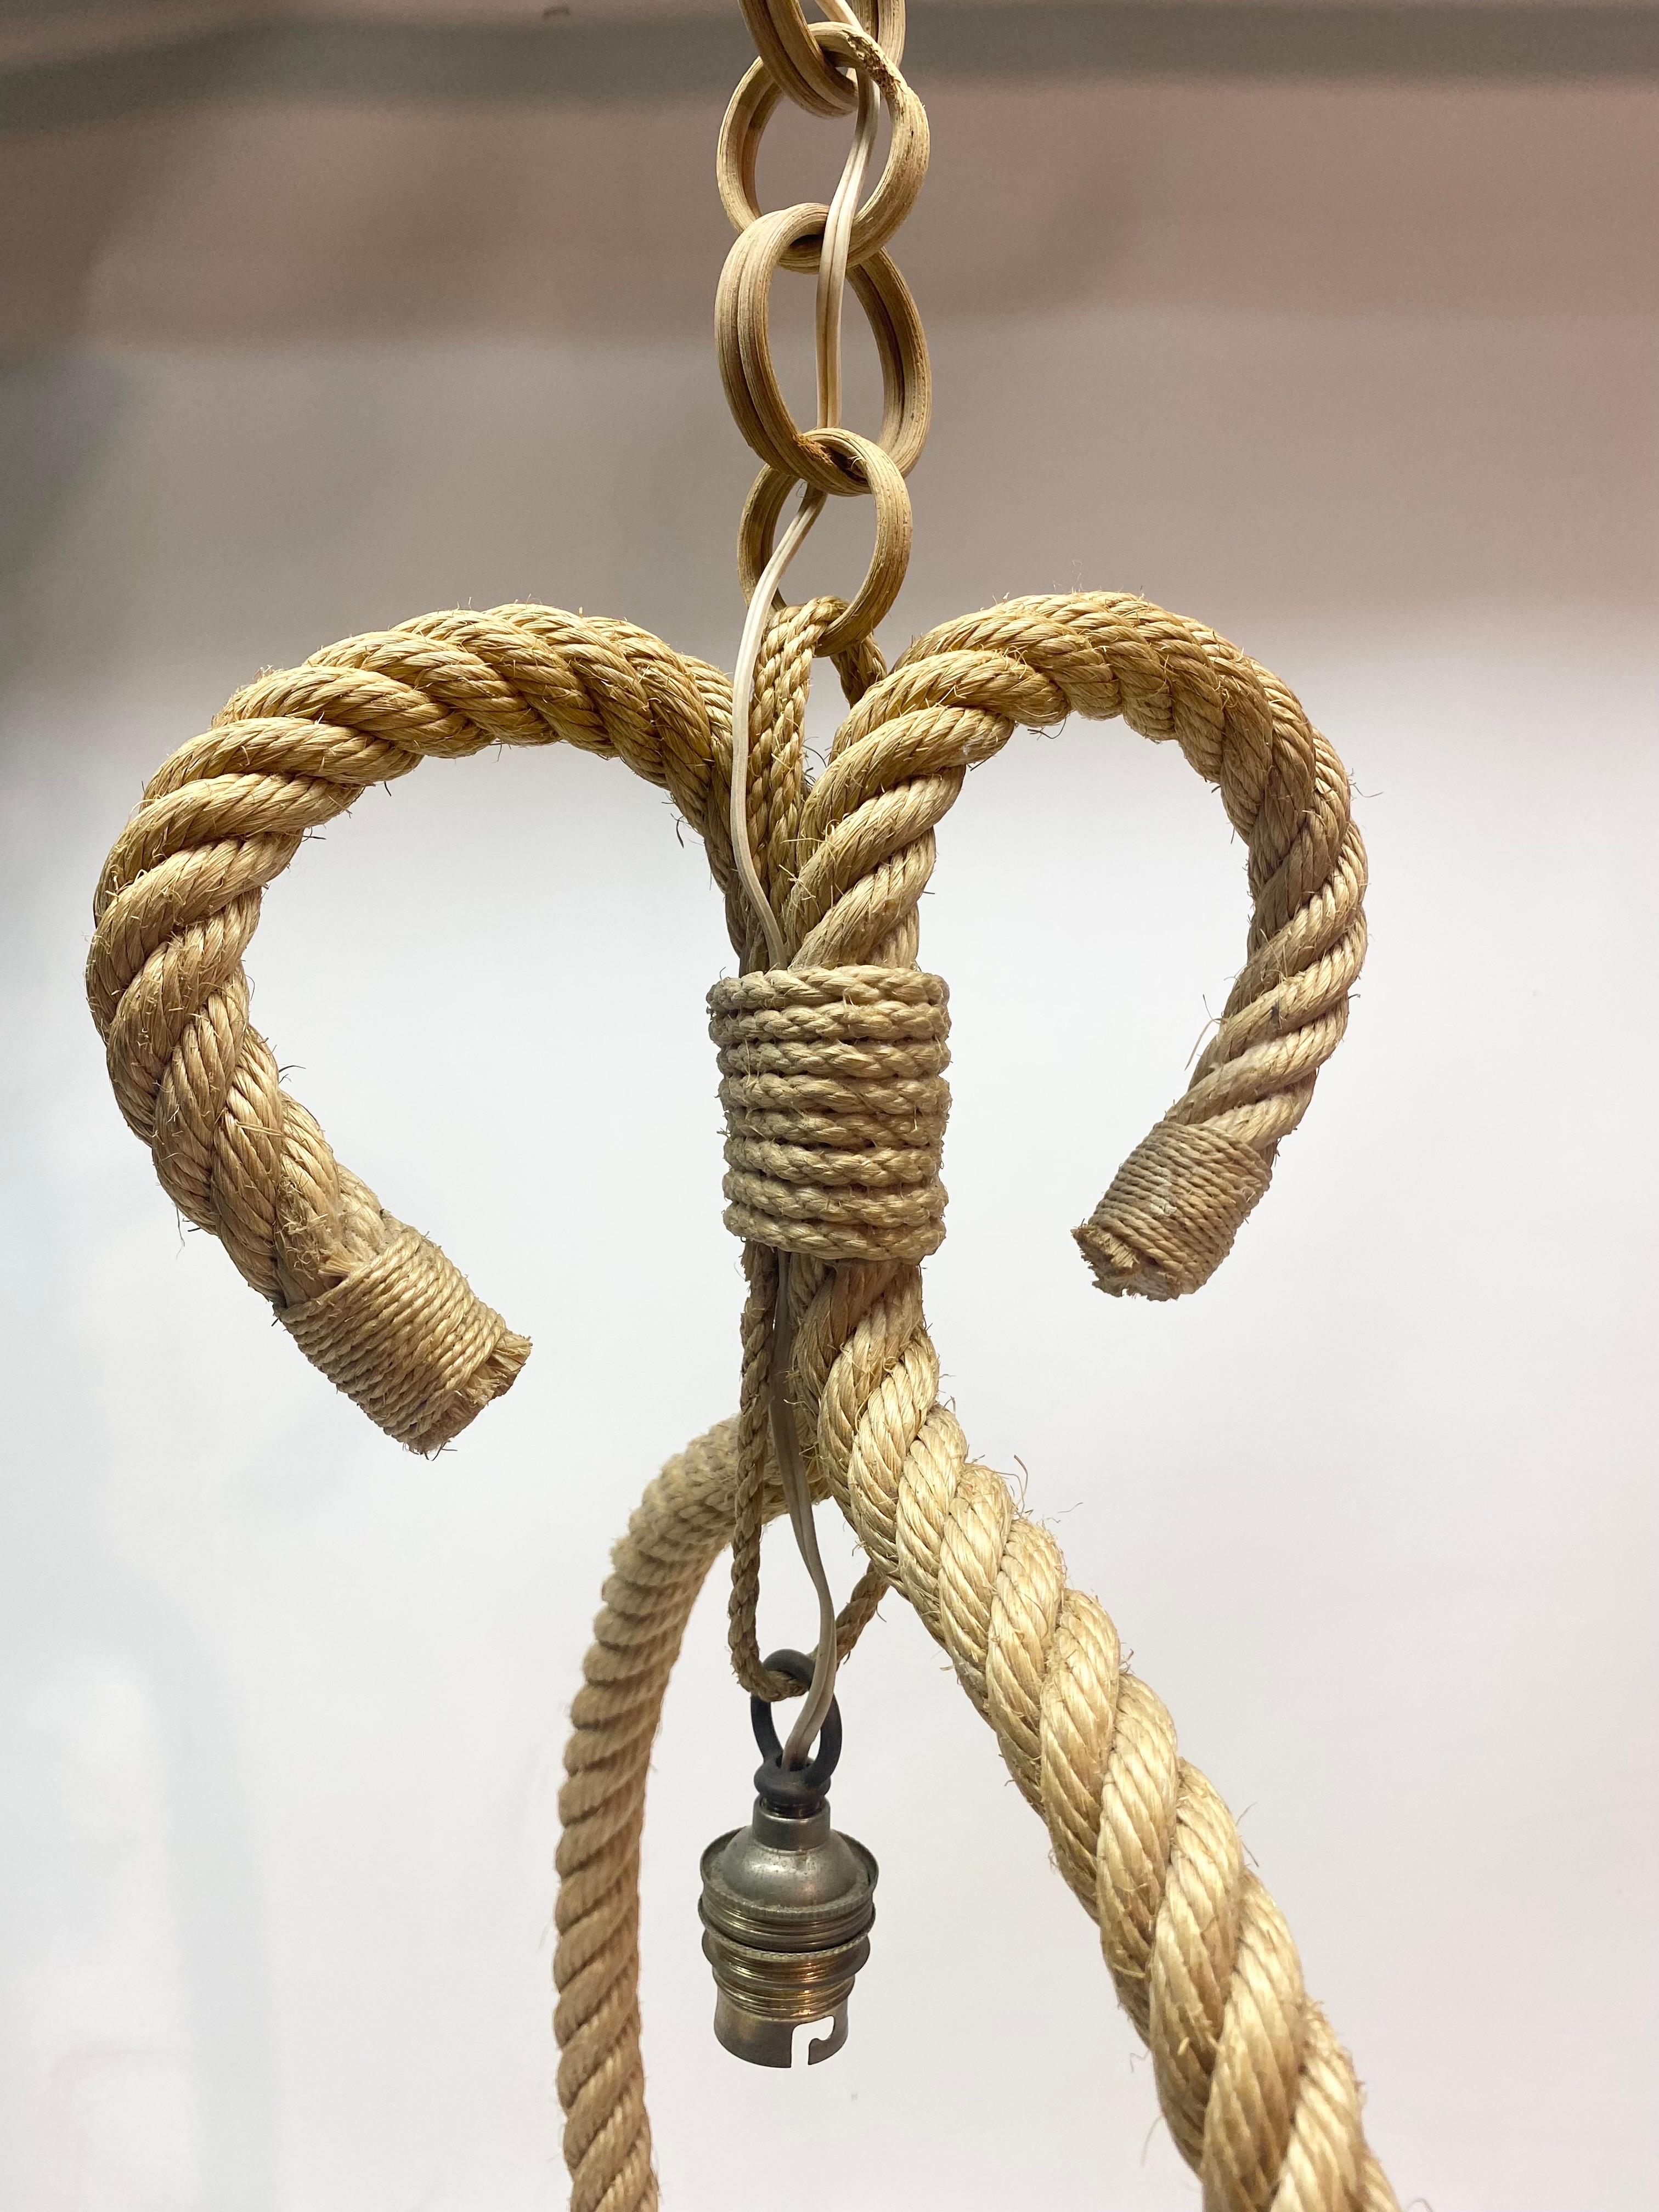 Original European Audoux Minet rope pendant.